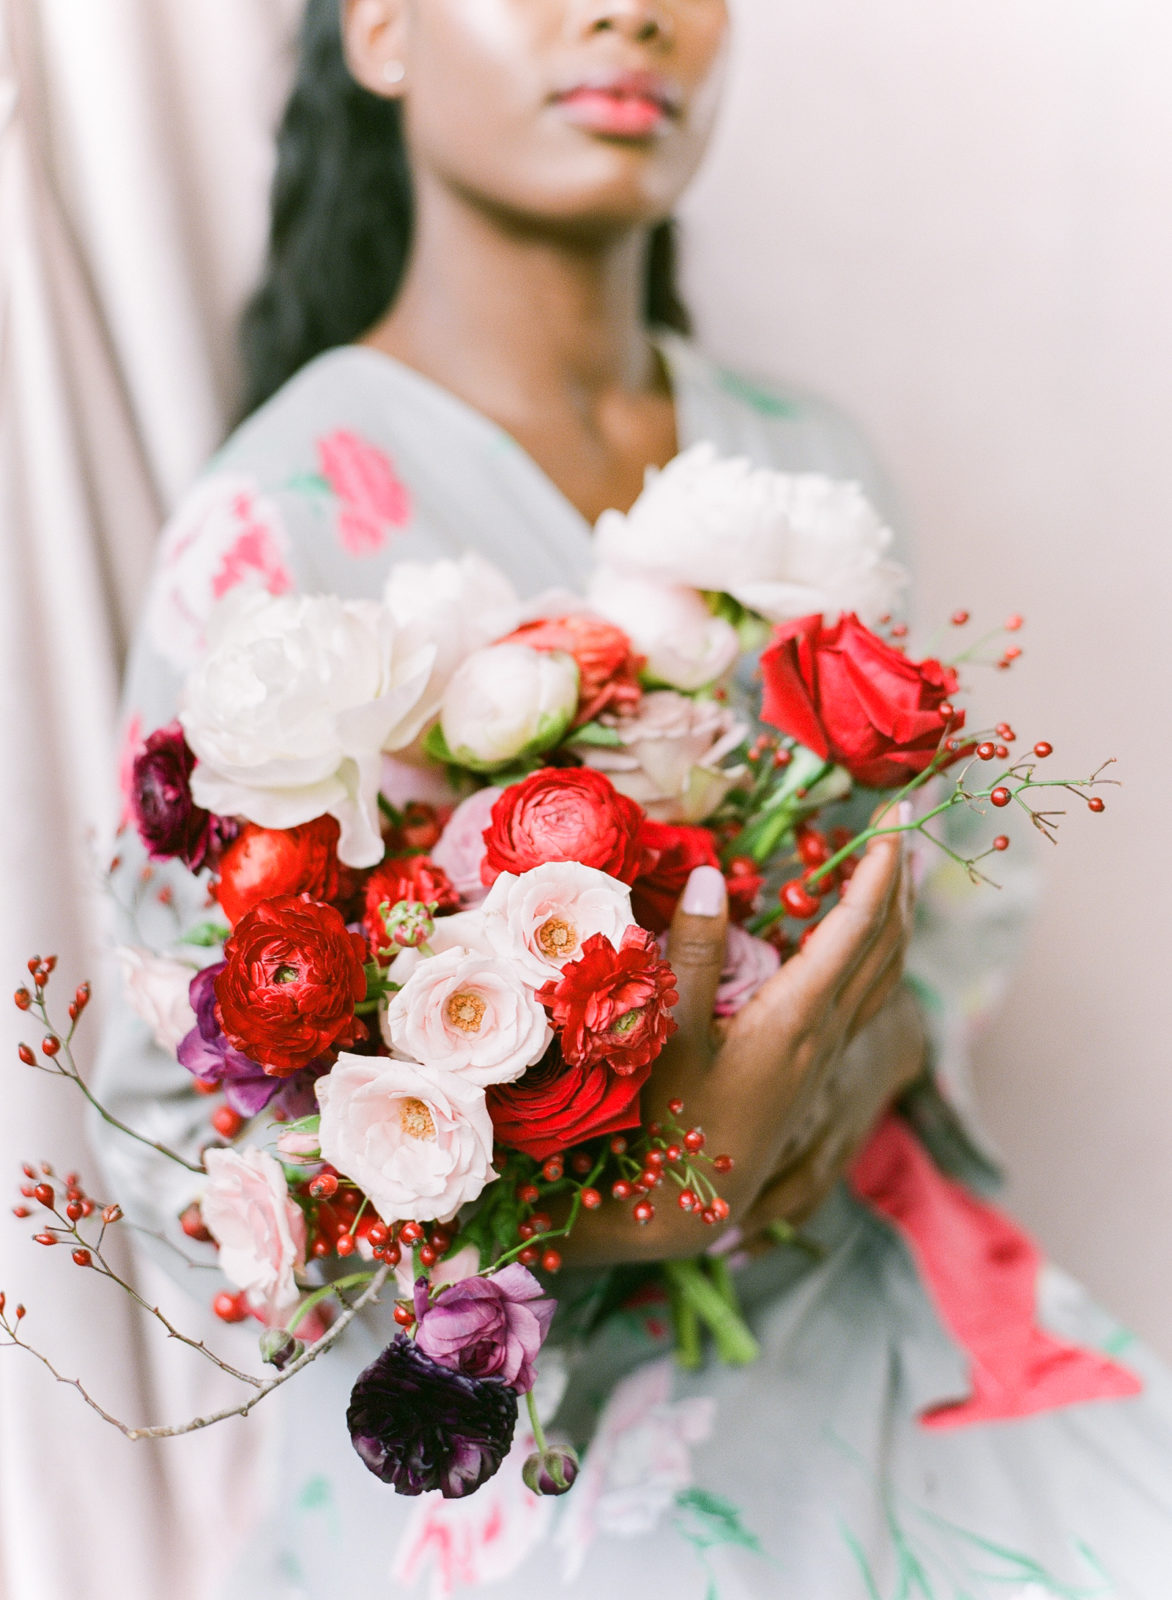 Best Wedding Bouquets of 2018 | Fine Art Wedding Photography | Film Wedding Photography | Molly Carr Photography | Colorful Bridal Bouquet